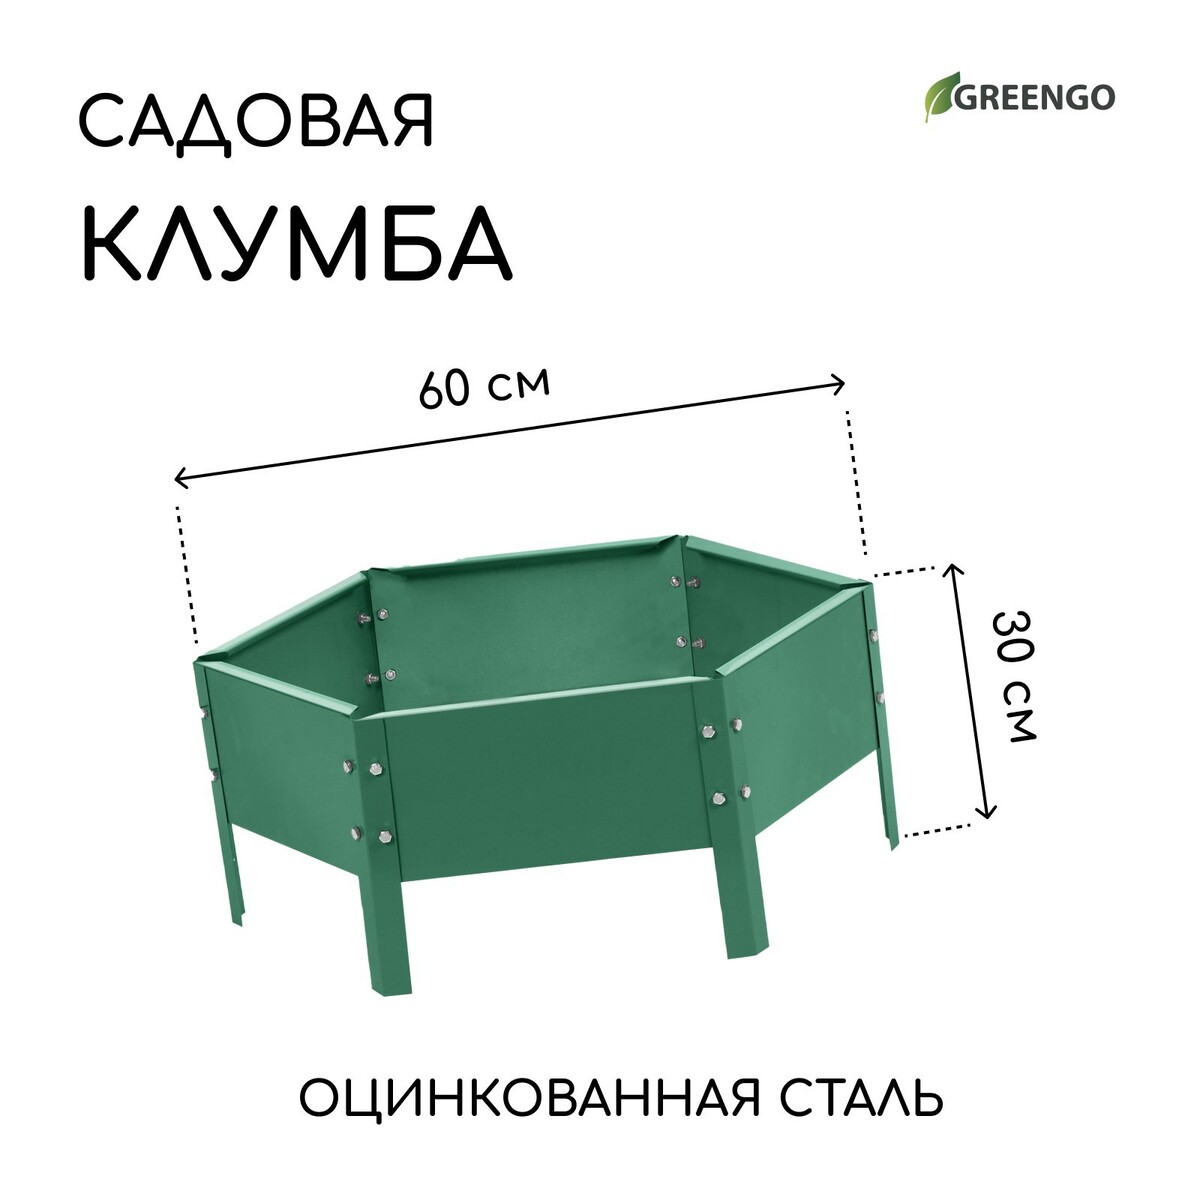 Клумба оцинкованная, d = 60 см, h = 15 см, зеленая, greengo